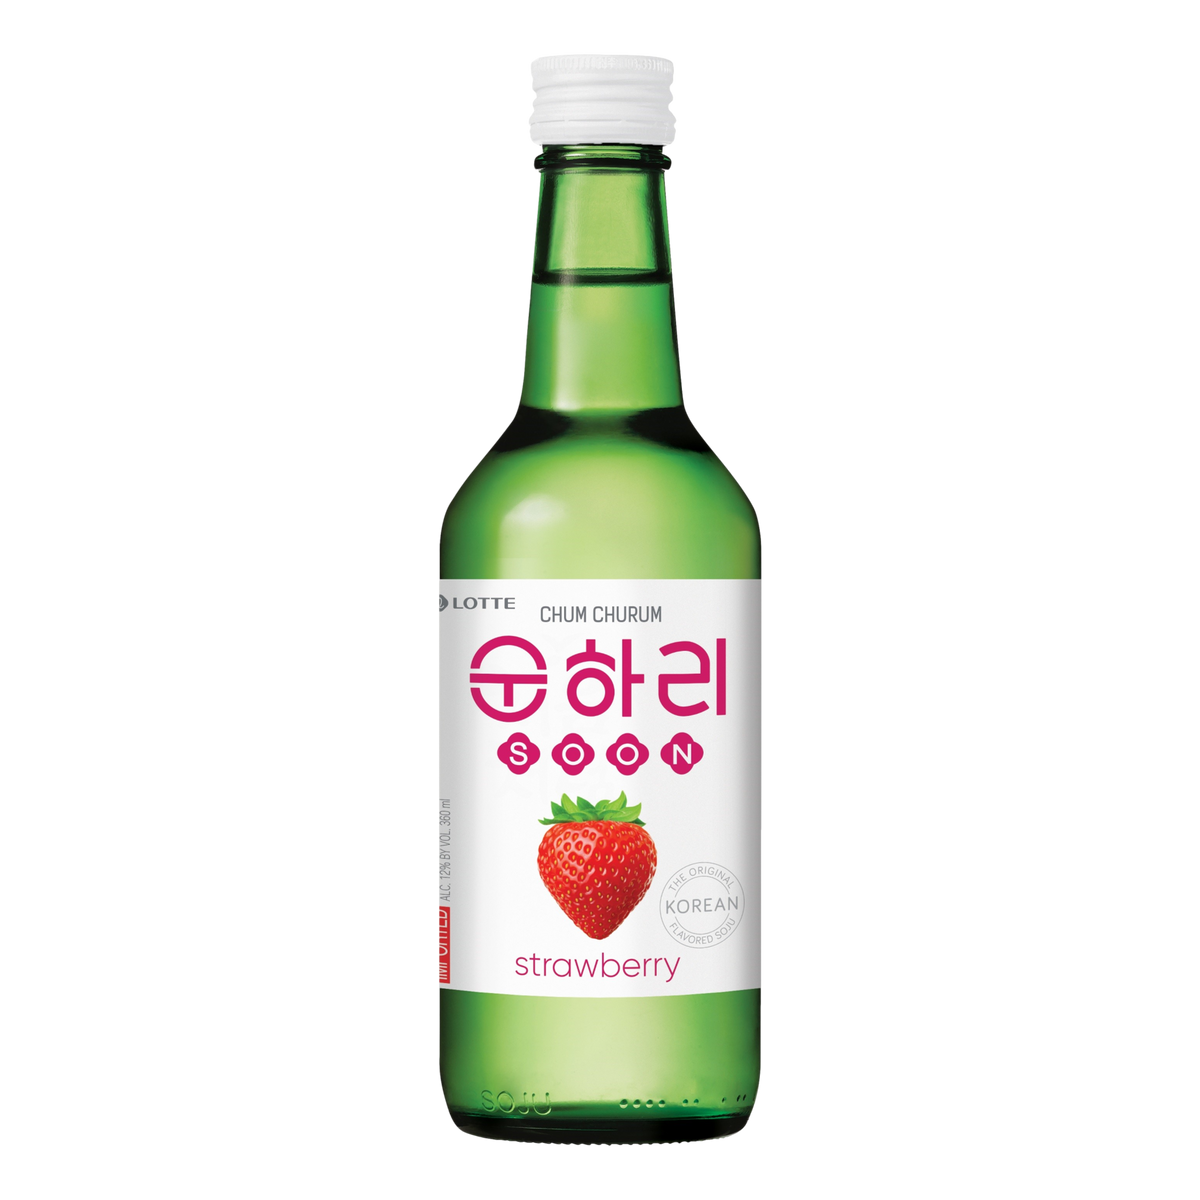 Lotte Chum Churum Strawberry Soju 360ml Bottle Single - Camperdown Cellars